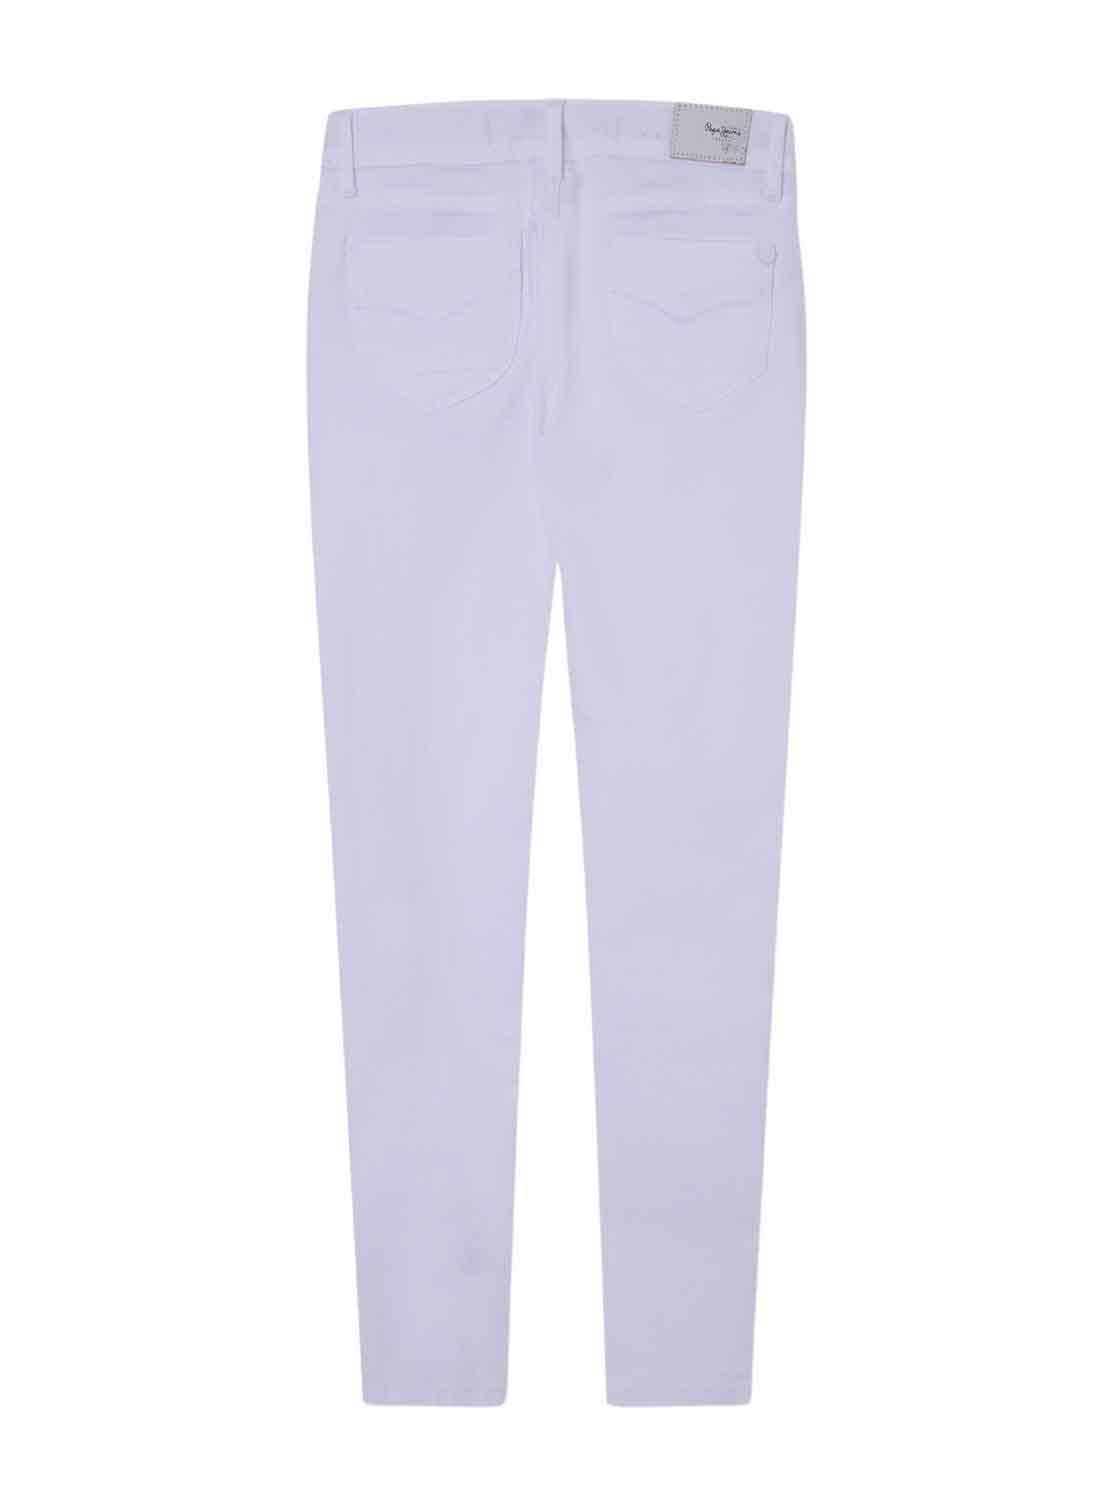 Pantaloni Jeans Pepe Jeans Pixlette Bianco Bambina